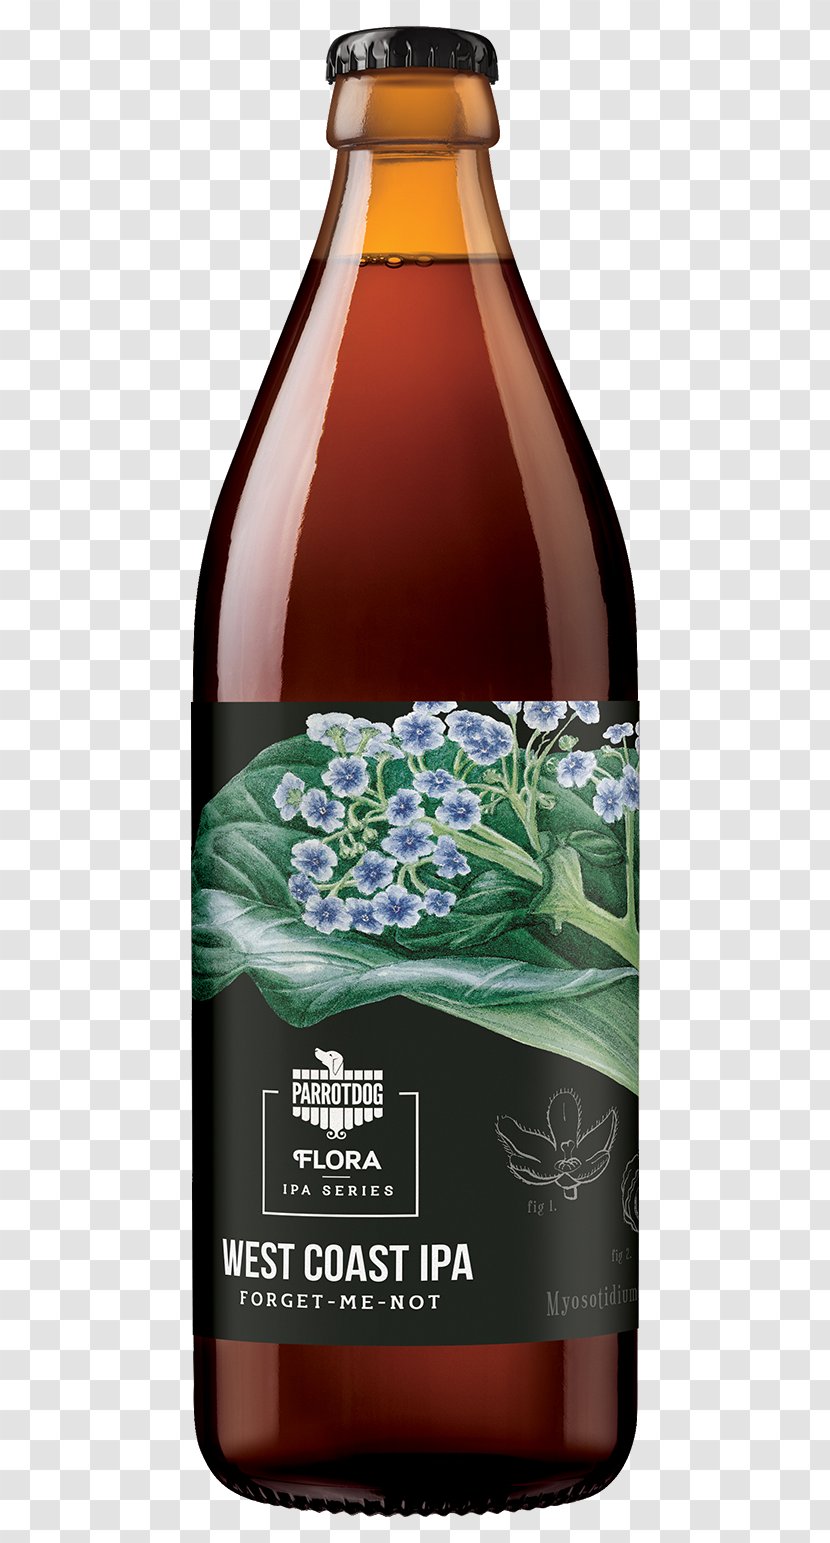 Parrotdog Brewery Beer Bottle India Pale Ale Hops Transparent PNG